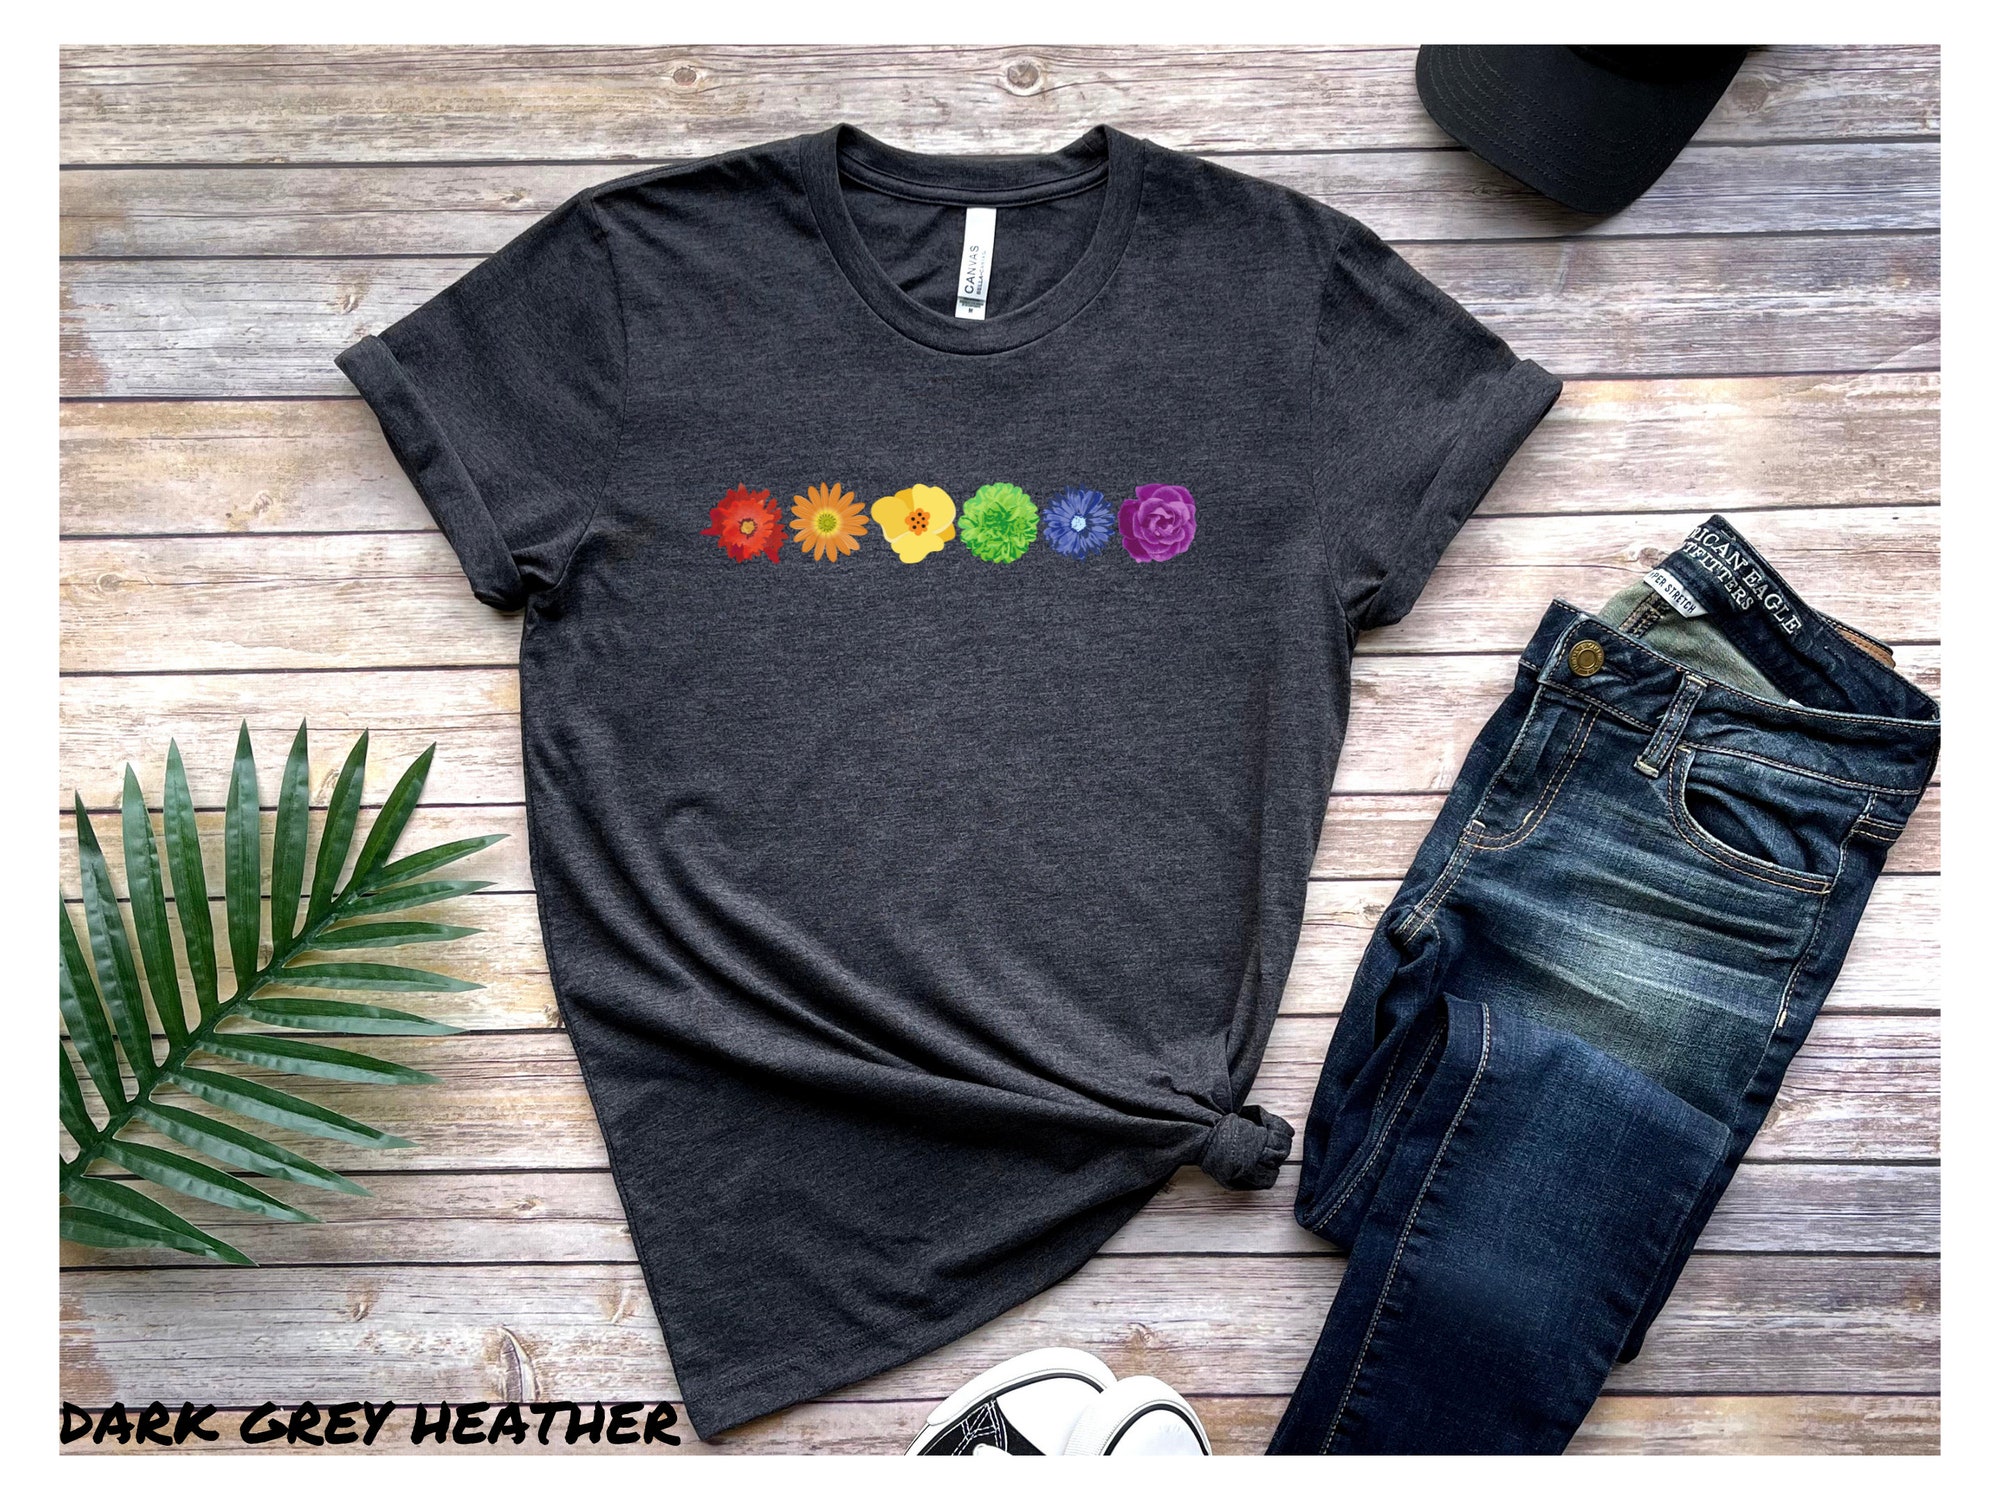 Discover LGBTQ Flowers T-Shirt